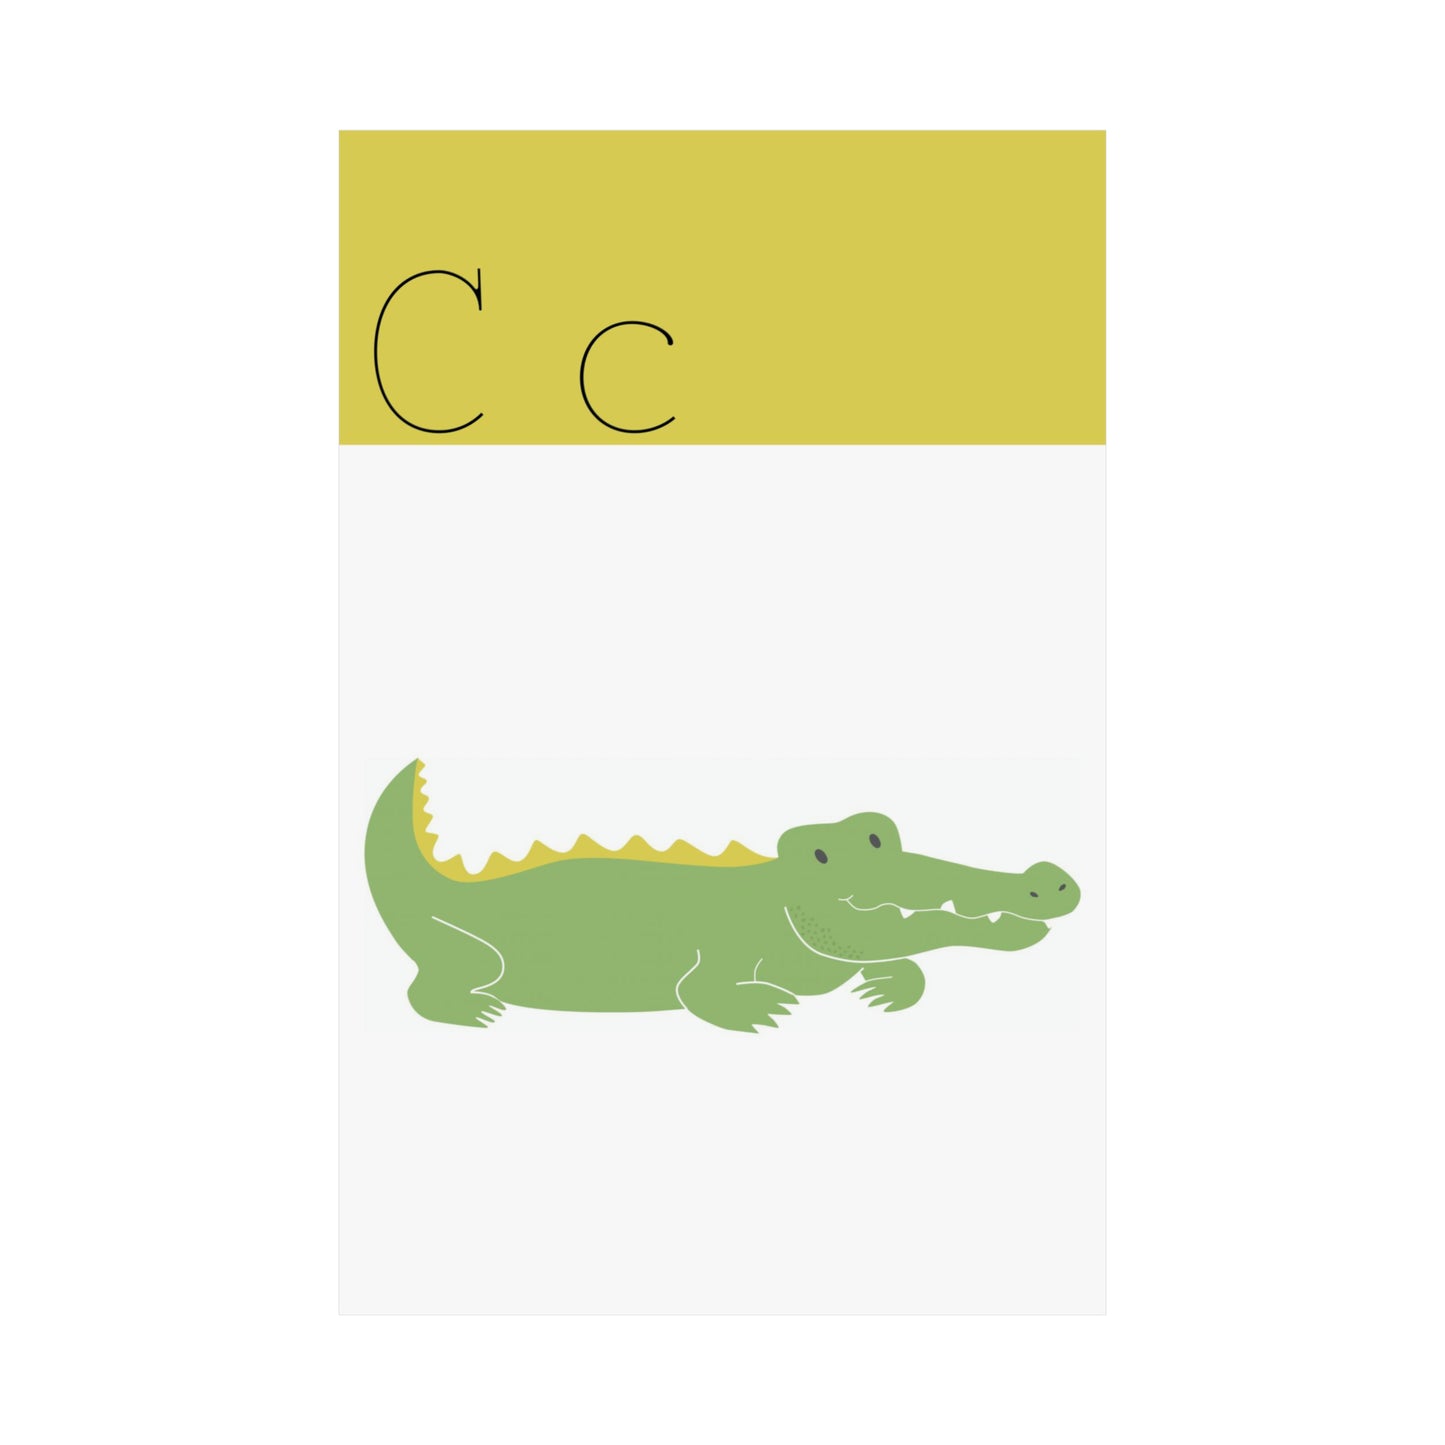 Crocodile Poster in white background 